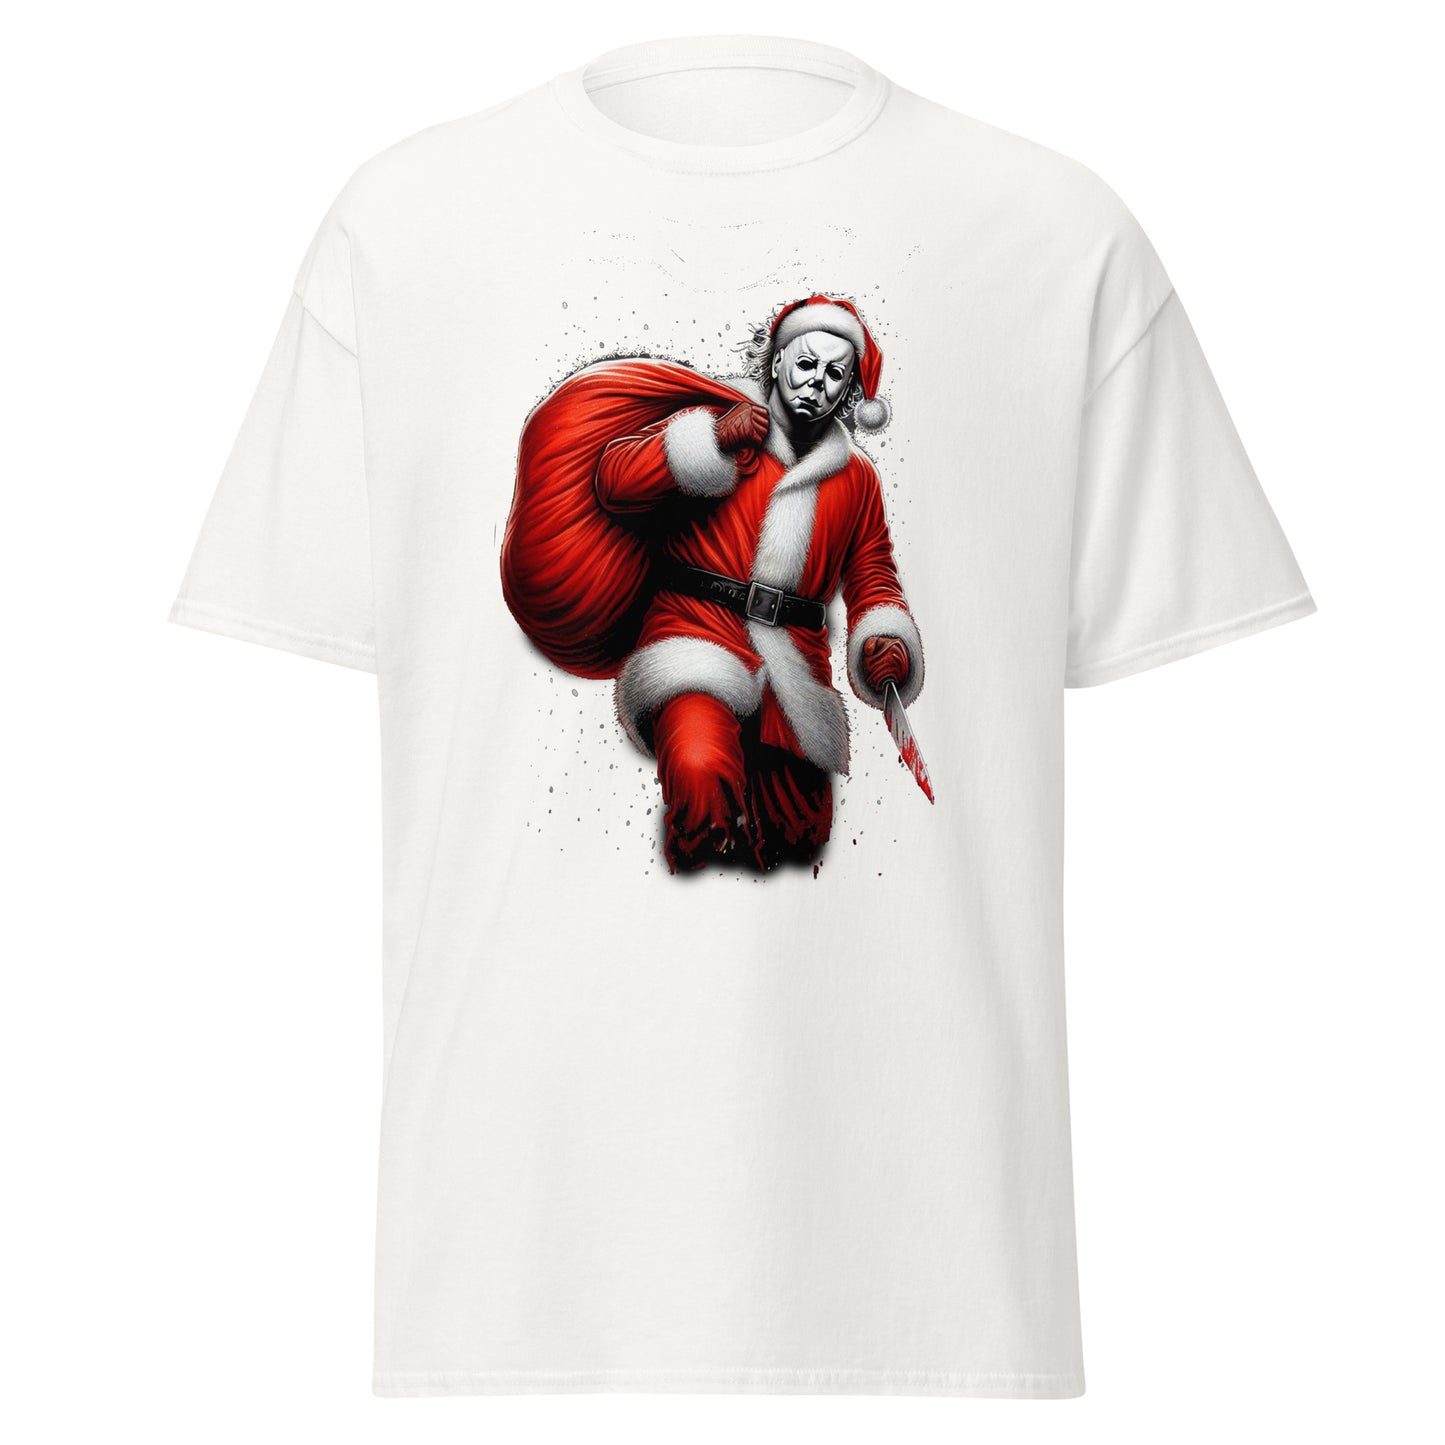 Michael Myers Santa T-Shirt - A Silent Night of Horror